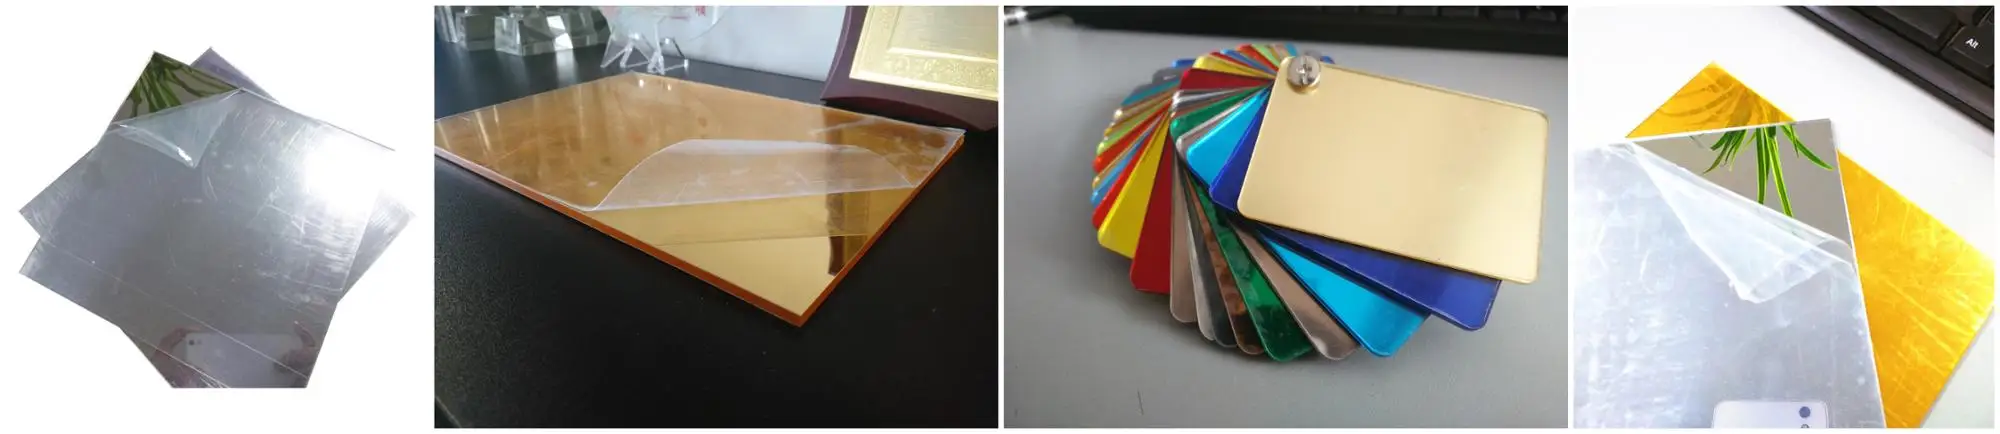 acrylic mirror sheet